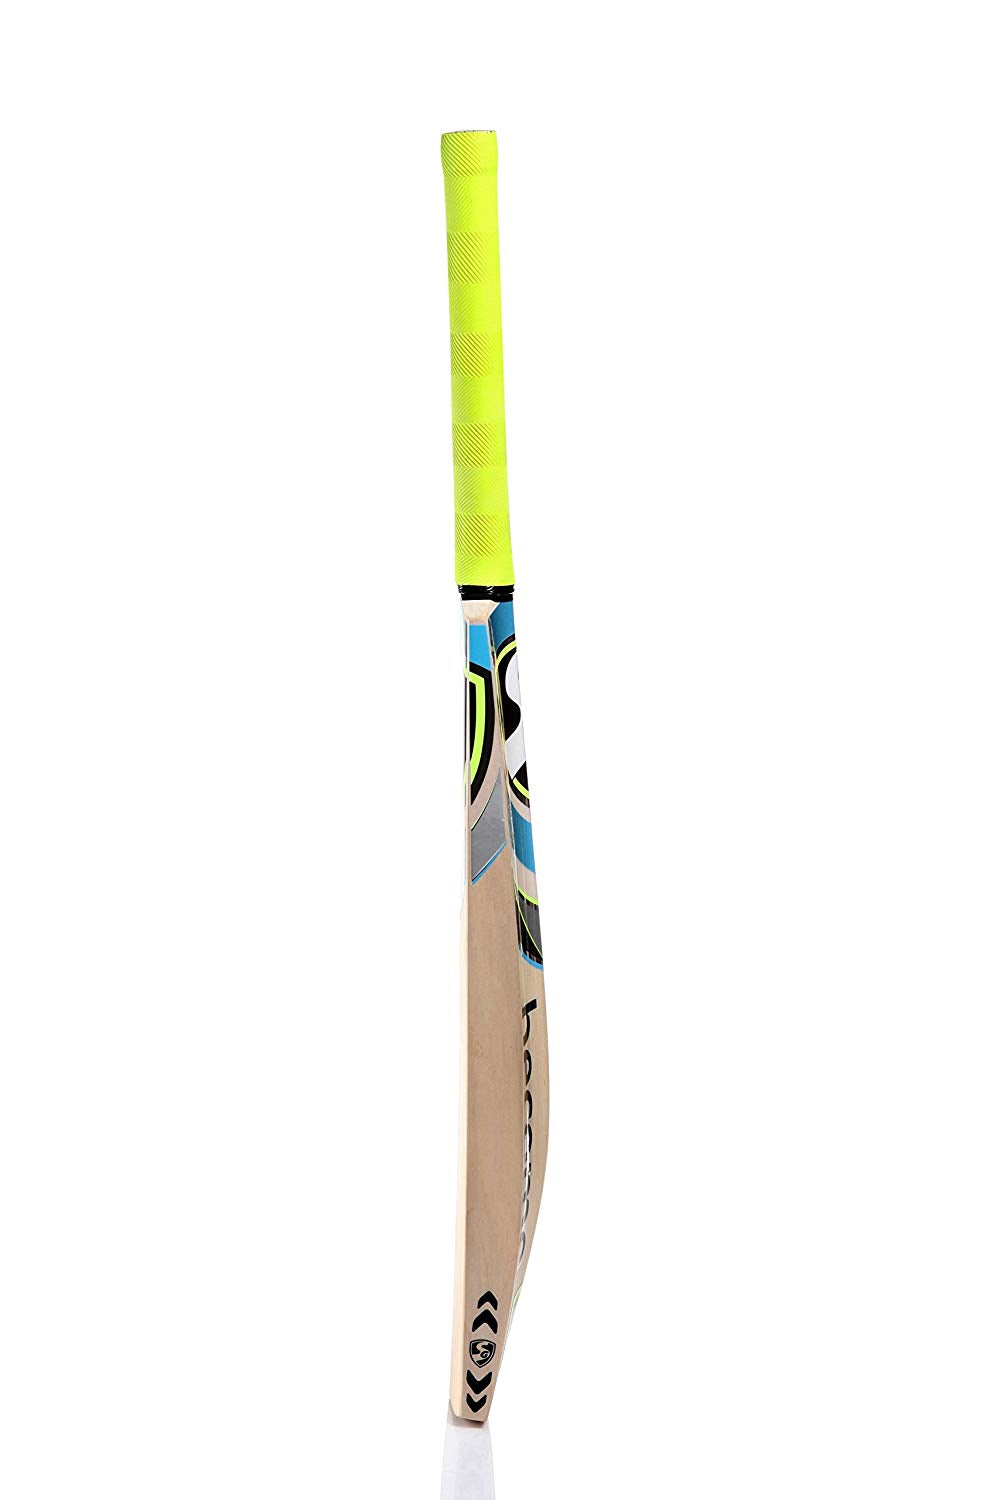 SG Nexus Plus Kashmir Willow Cricket Bat - Best Price online Prokicksports.com